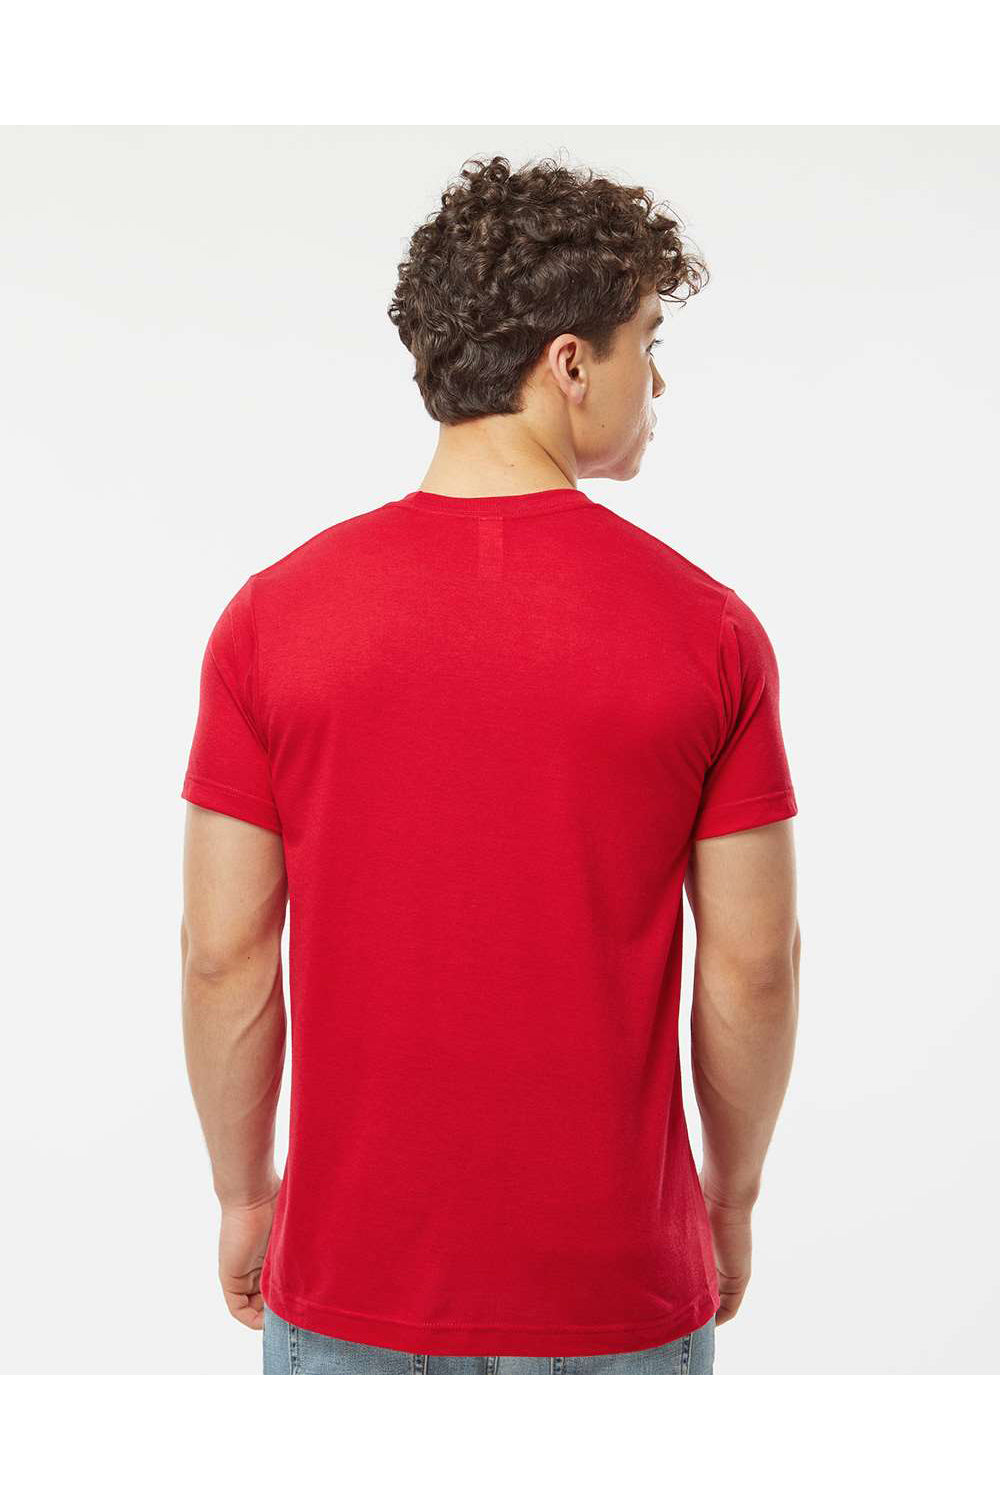 Tultex 241 Mens Poly-Rich Short Sleeve Crewneck T-Shirt Red Model Back